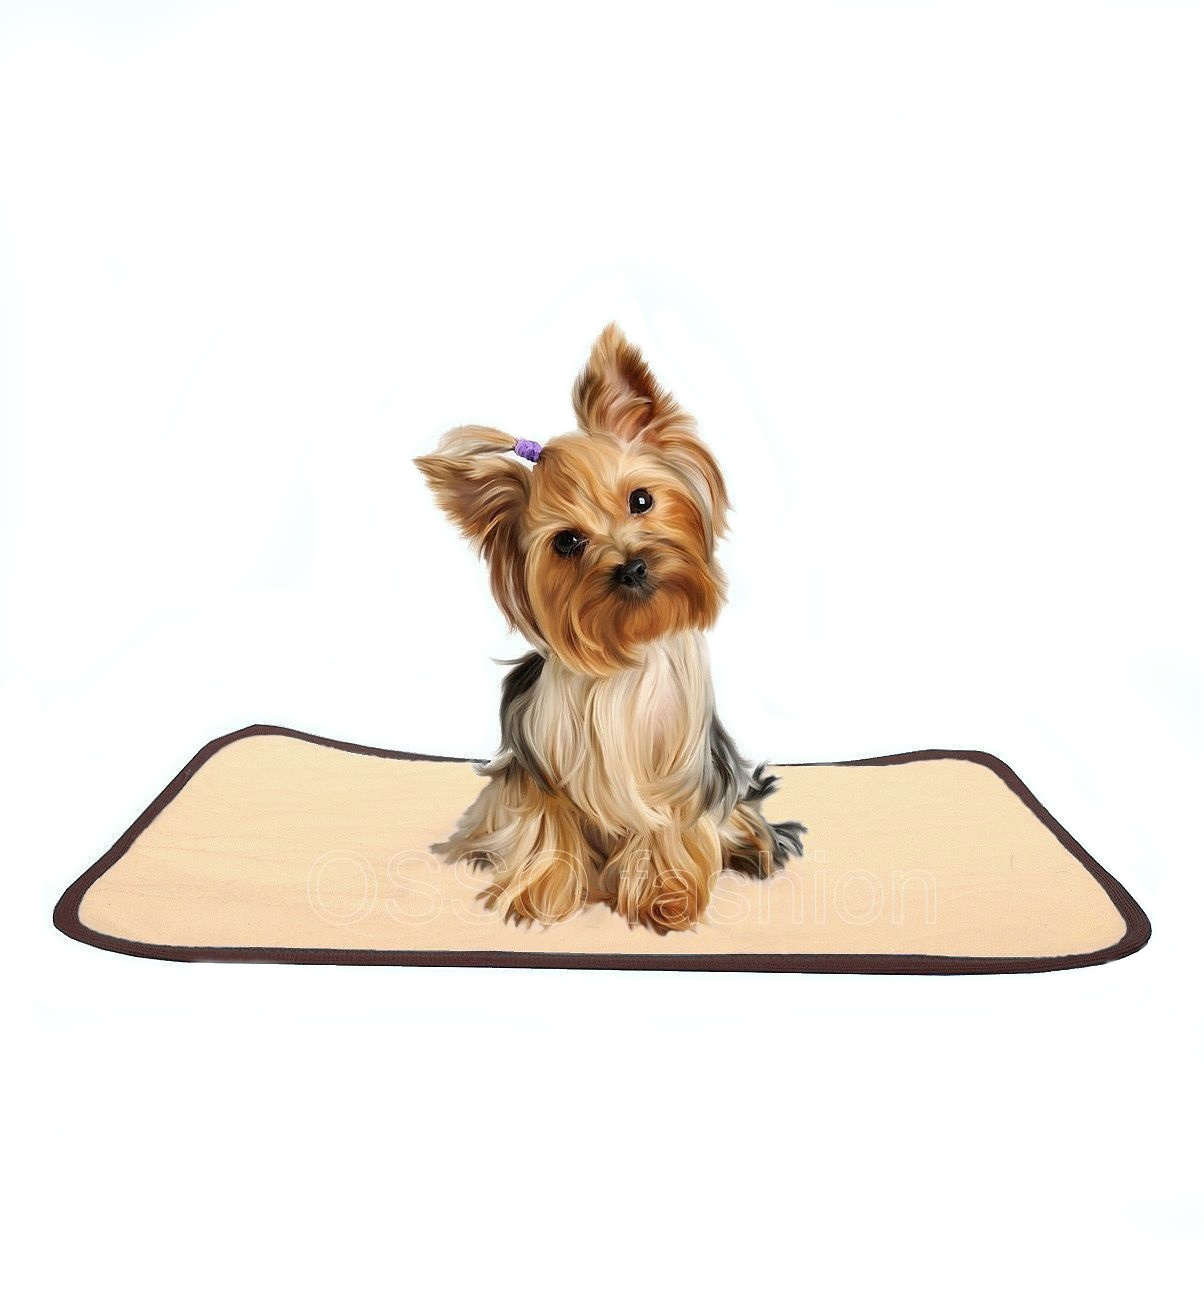 OSSO OSSO пеленка для собак многоразовая впитывающая (коричневая) (30*40 см) osso osso пеленка для собак многоразовая впитывающая 30 40 см